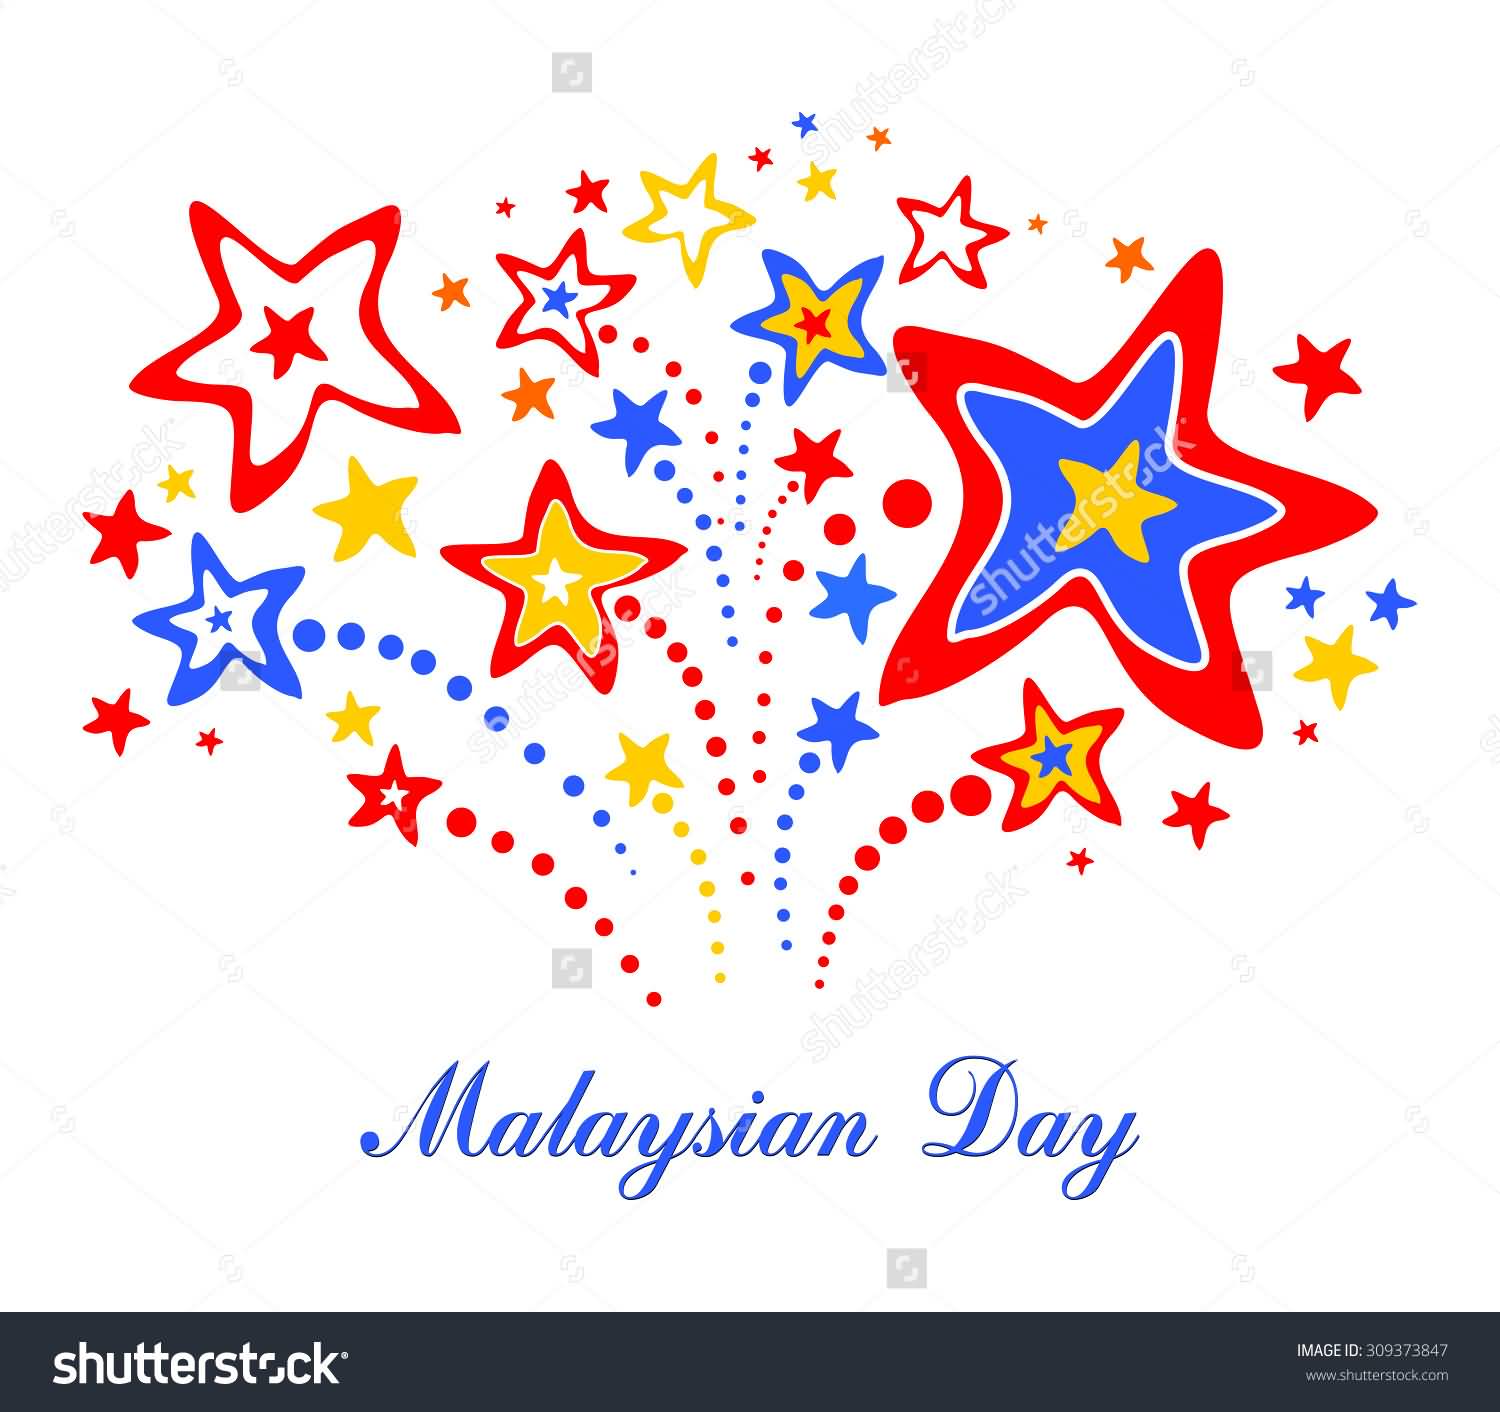 Malaysian Day Stars Illustration